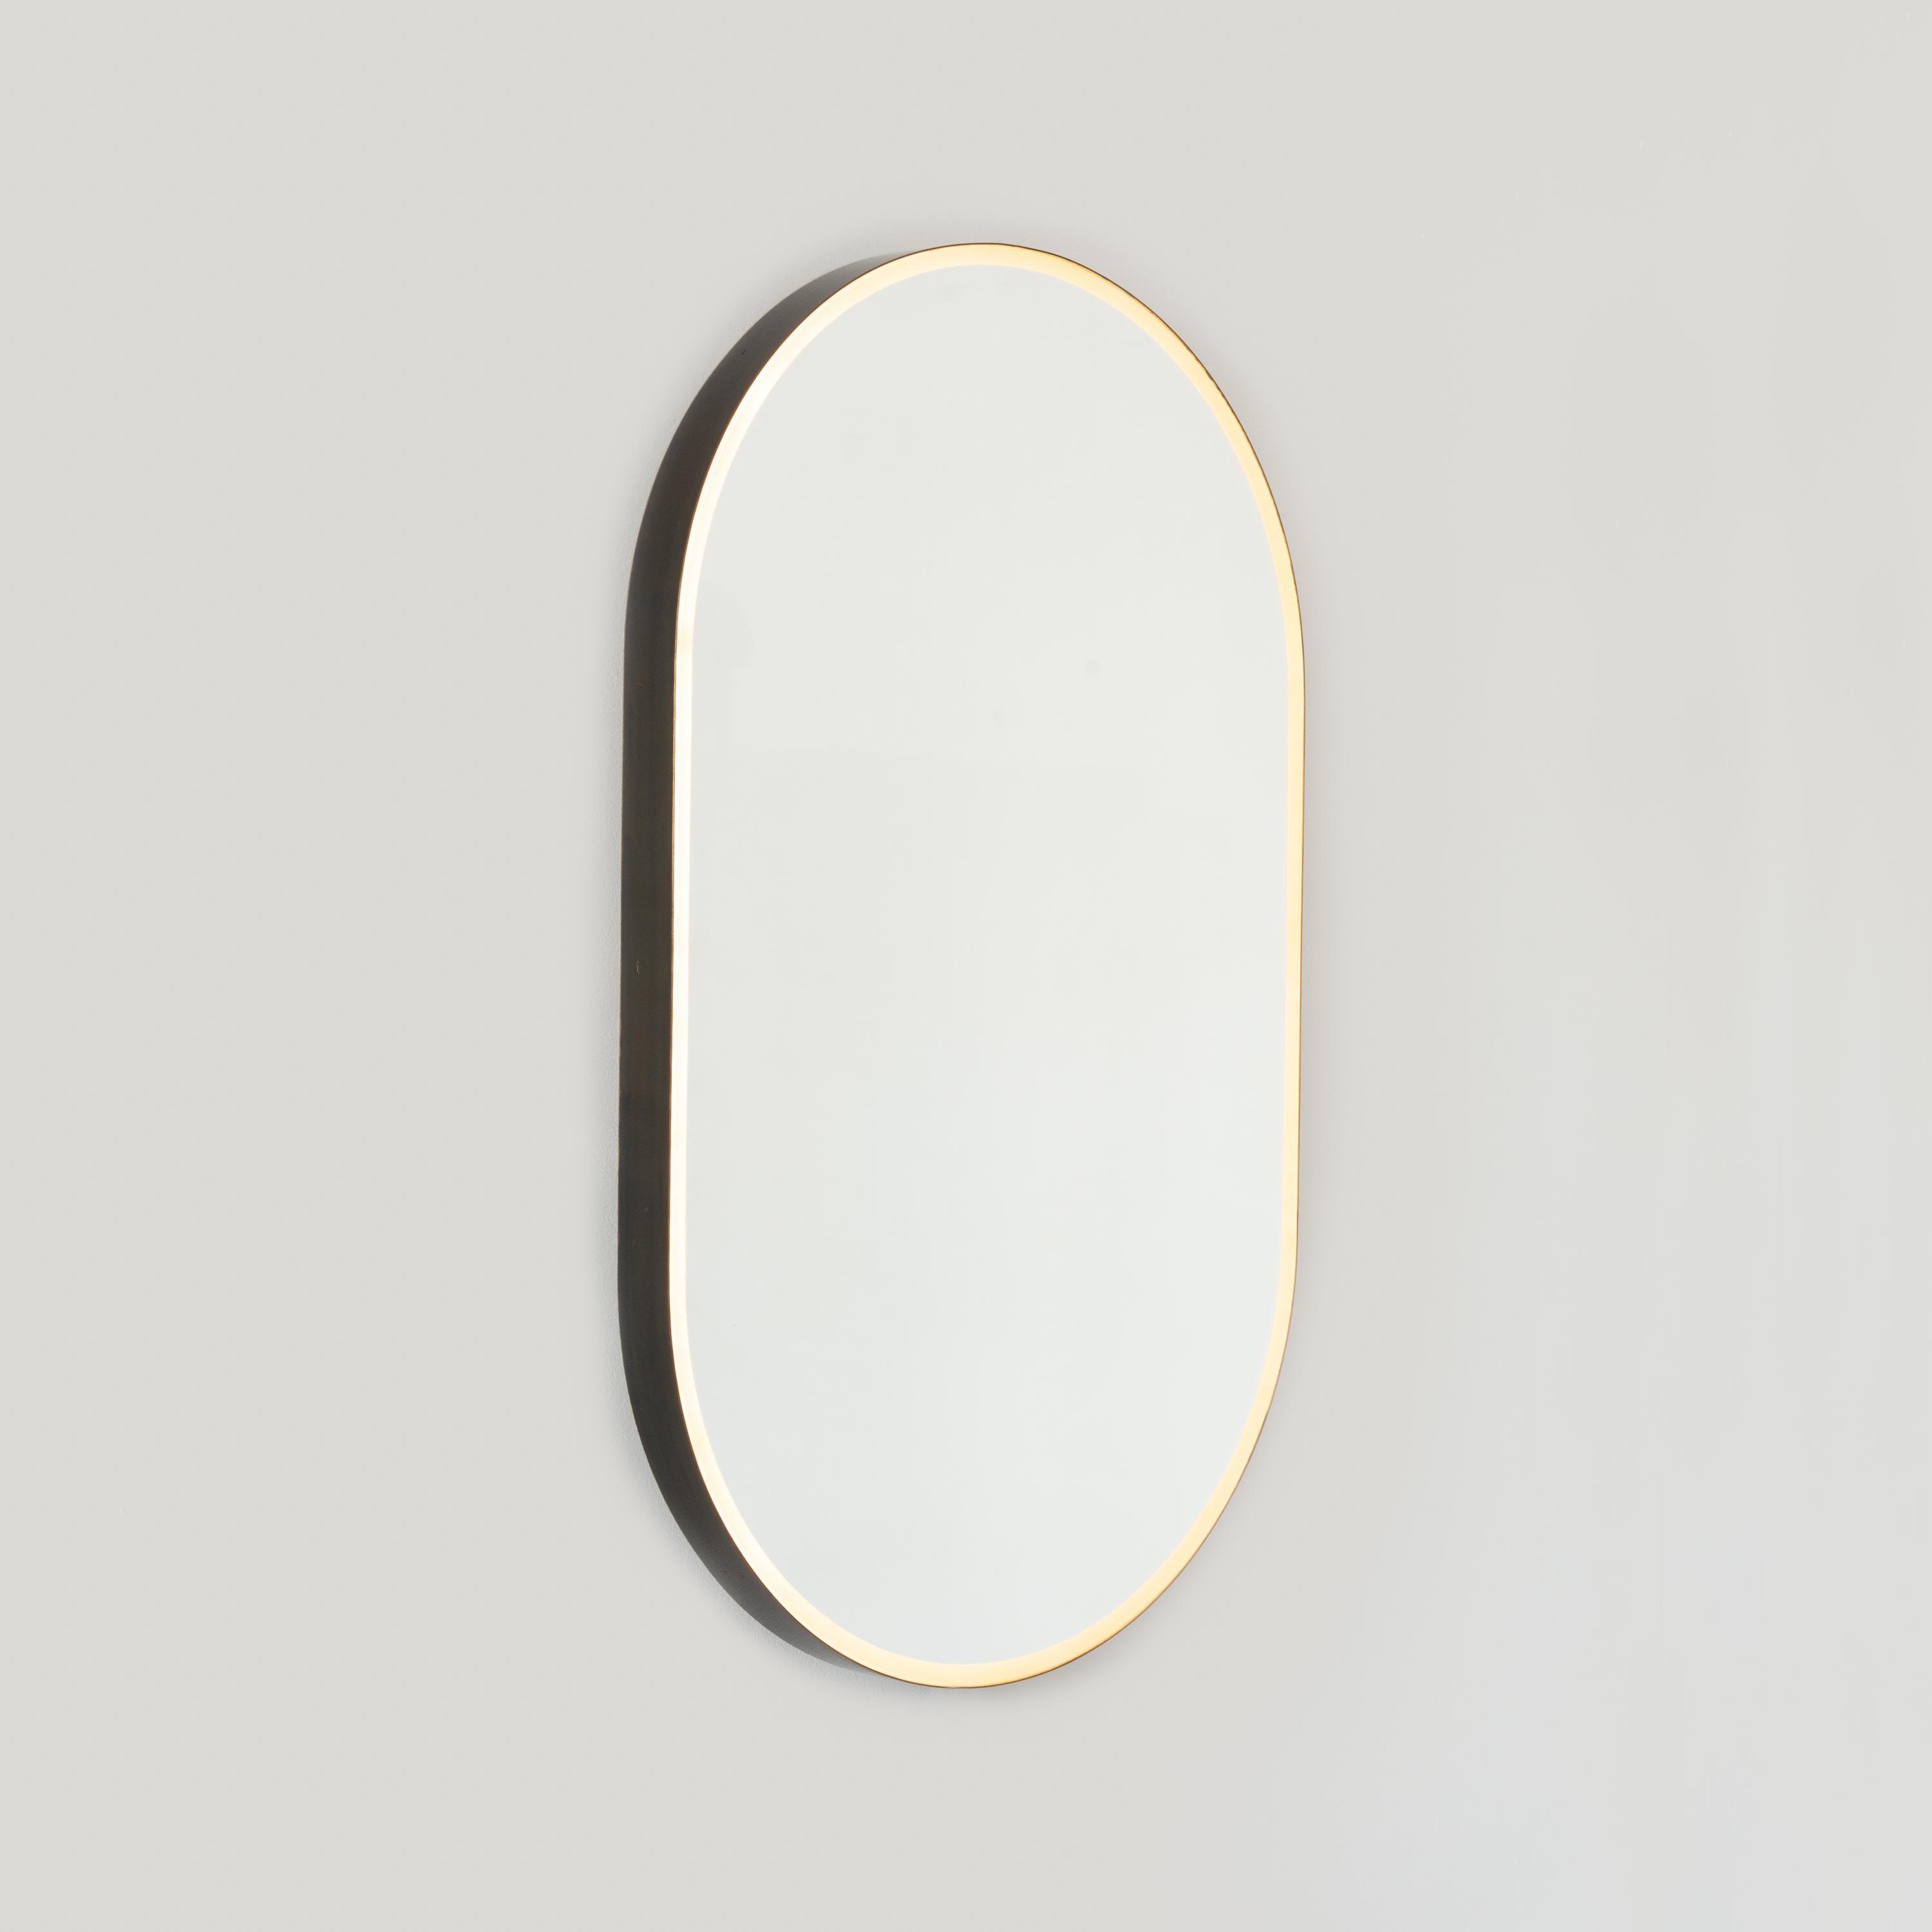 Capsula Illuminated Pill Shaped Mirror with Bronze Patina Frame, Medium For Sale 2